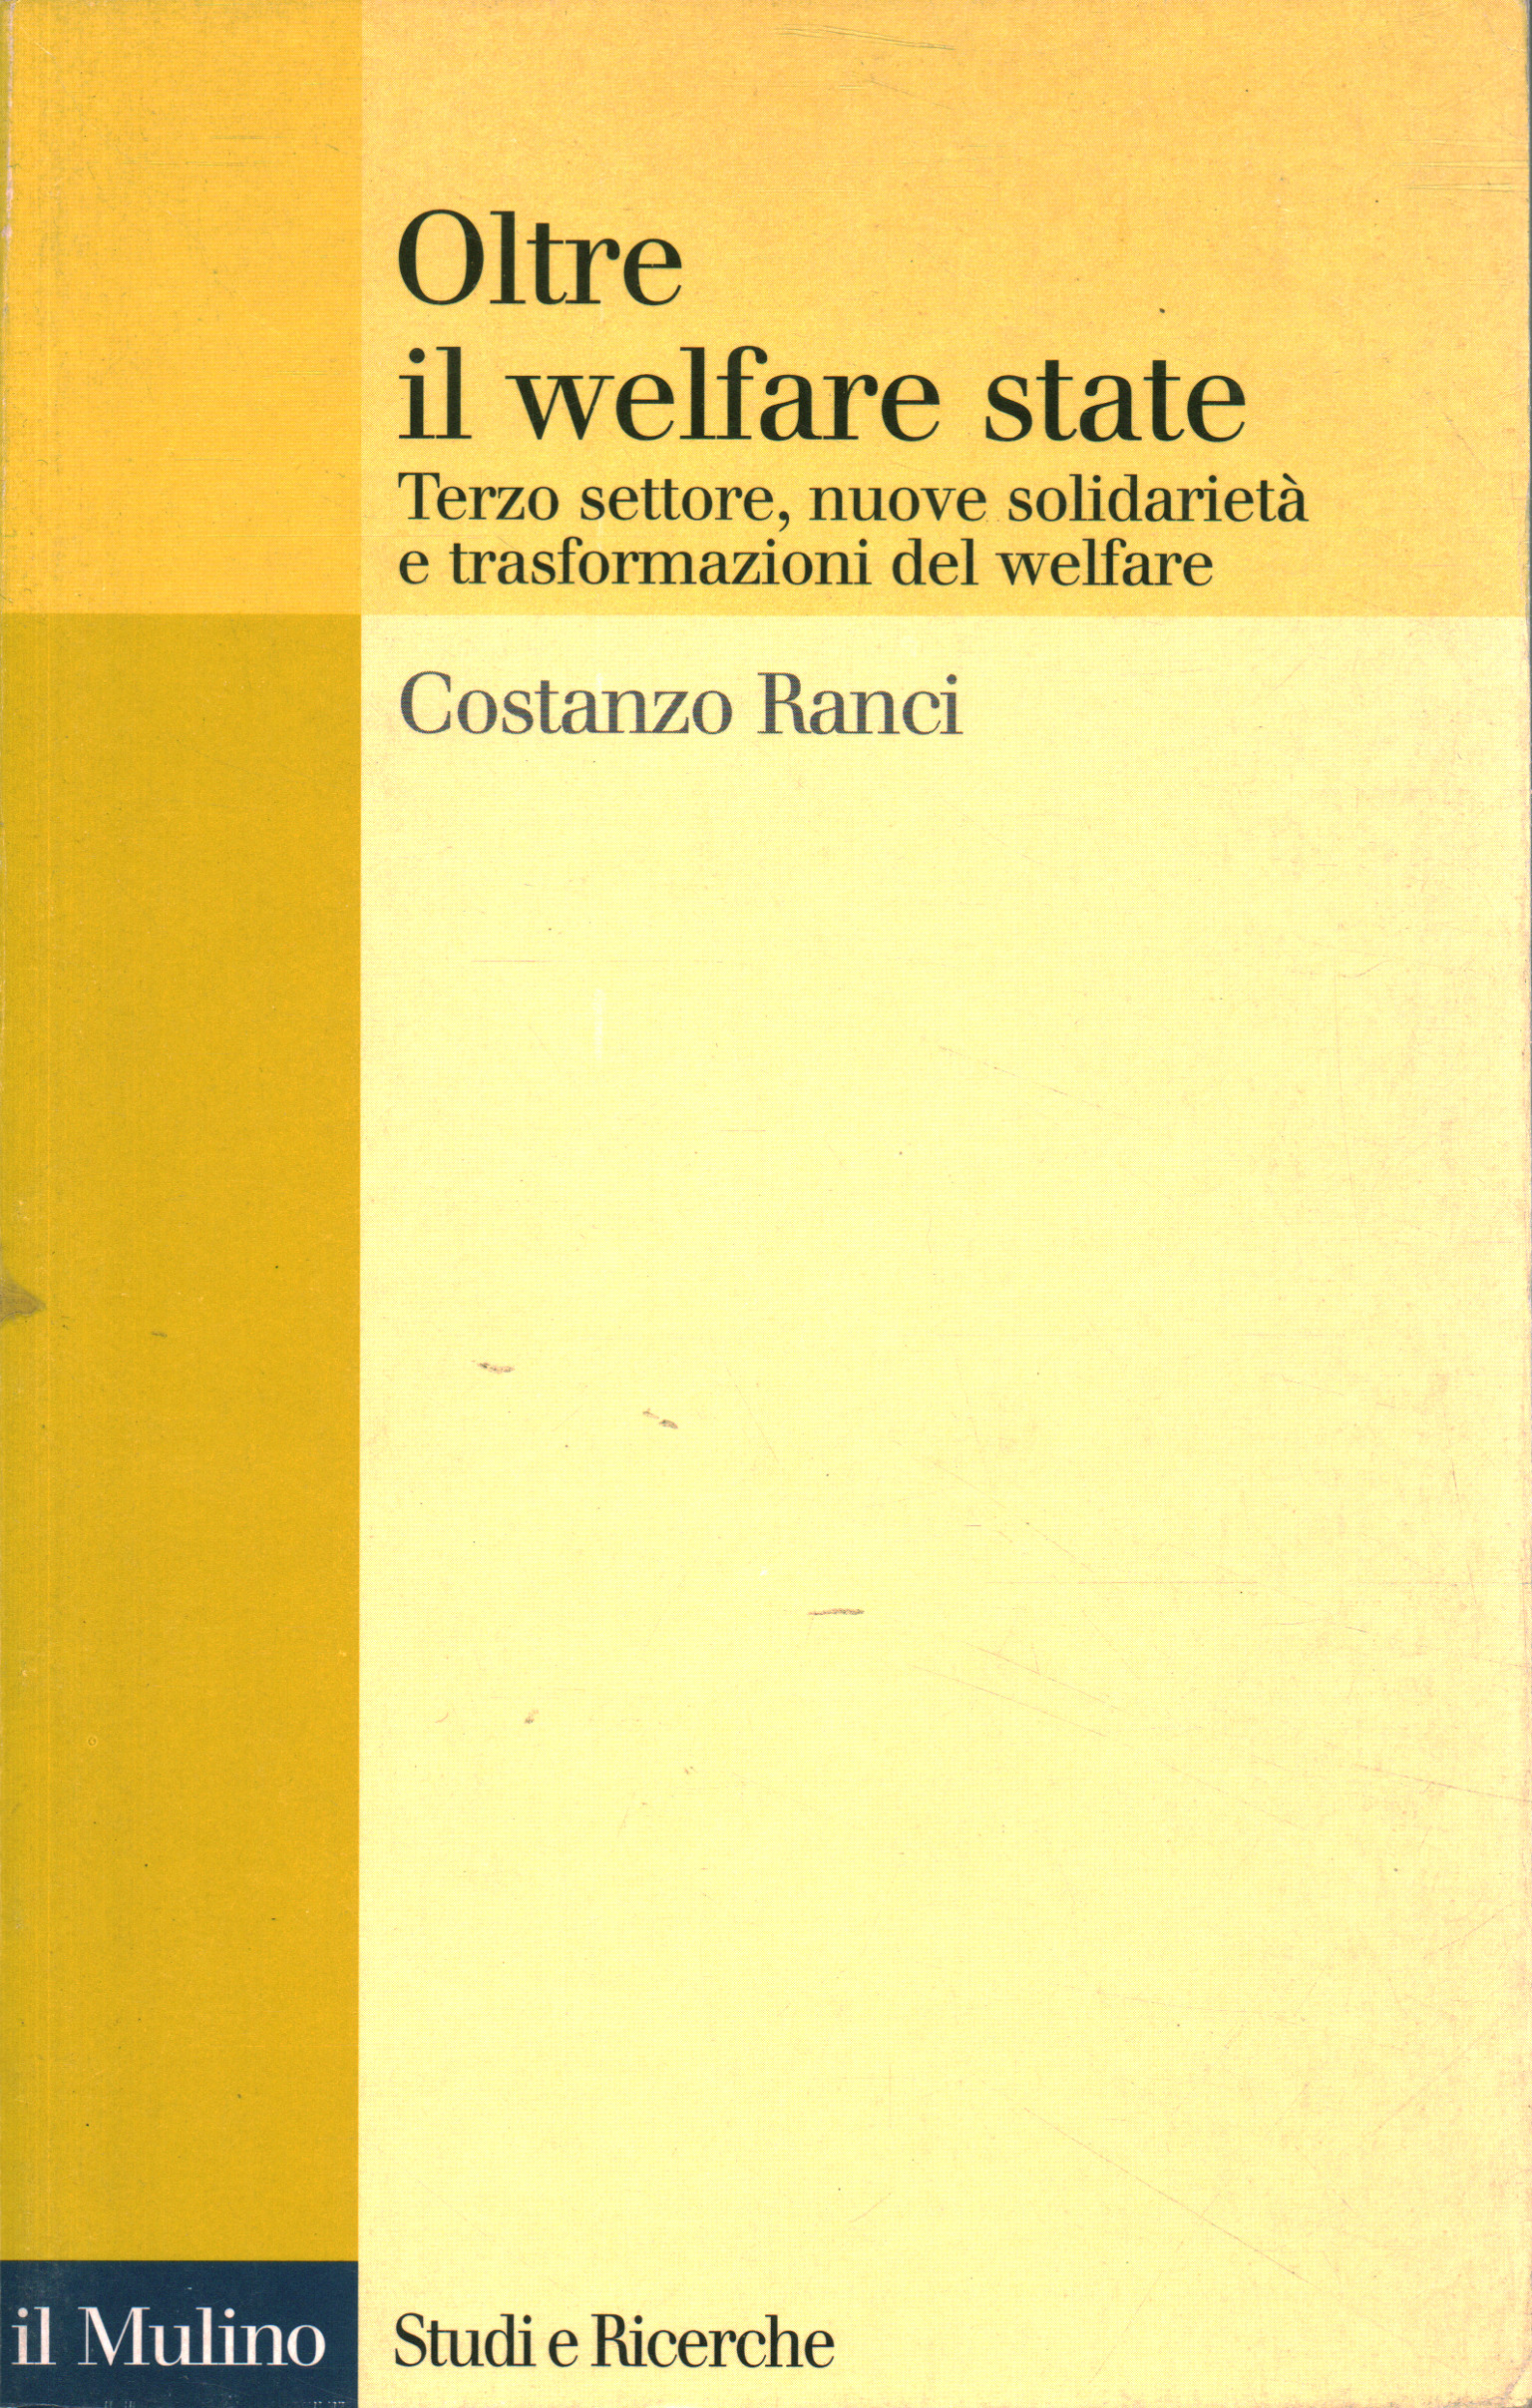 Beyond the welfare state, Costanzo Ranci